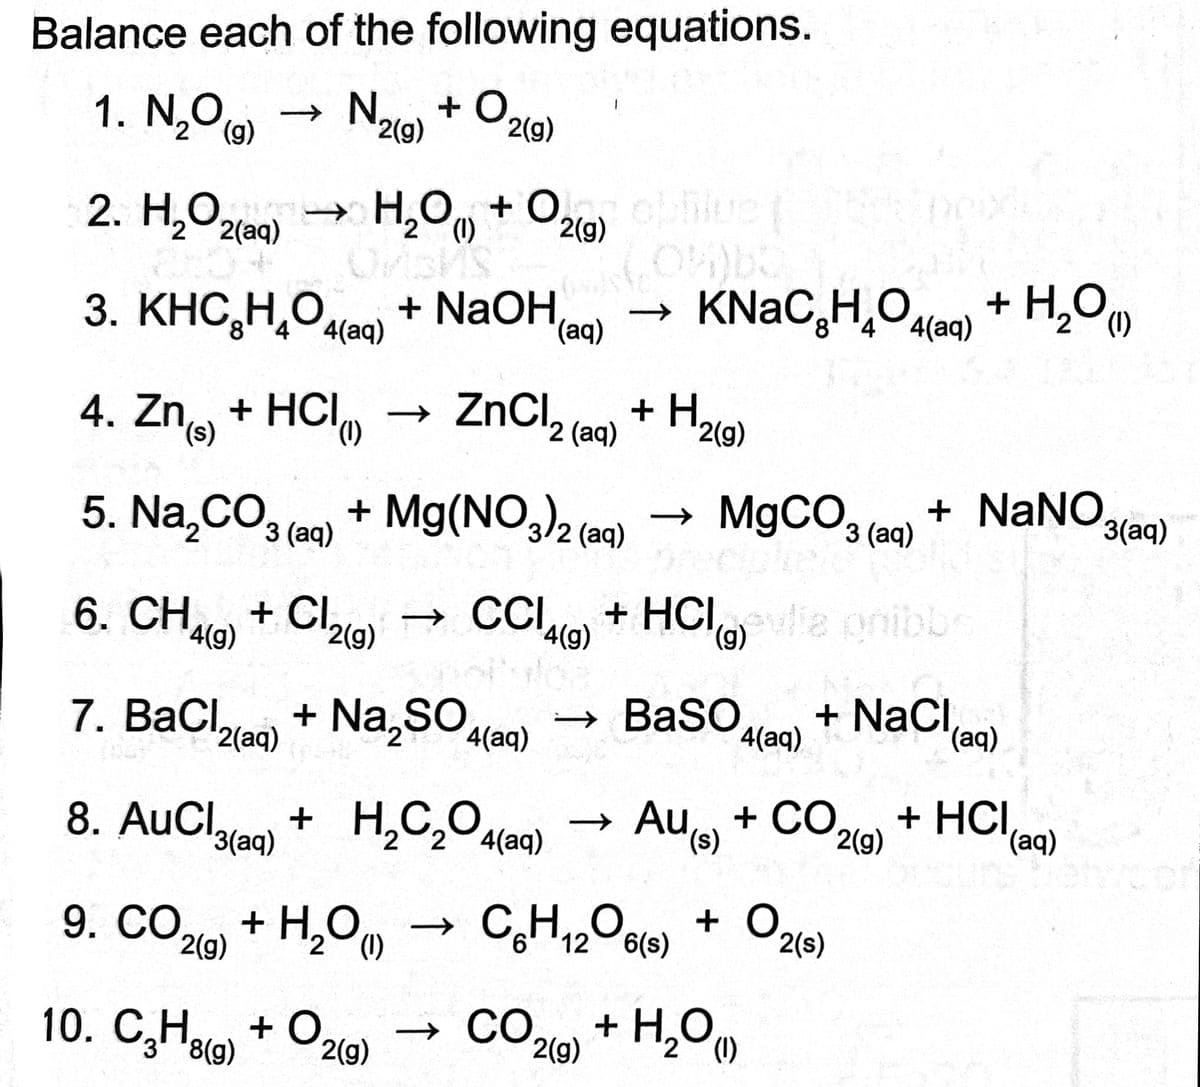 Balance each of the following equations.
1. N₂O (9) → No + O.
2
2(g)
2(g)
2. H₂O2(aq) → H₂O + O2(g) obhlue |
(1)
Oriba
ON
3. KHC,H,O4(aq) + NaOH,
4. Zn + HCI → ZnCl₂ (aq) + H₂
(1)
2
2(g)
5. Na₂CO3(aq) + Mg(NO3)2 (aq) → MgCO3(aq)
eletro
10. C3H8(g) + O₂
KNaC₂H₂O4(aq) + H₂O
(aq)
→
(1)
6. CH4(g) + Cl2(9) → CCI4(g) + HCl)evlia pribbs
(g)
7. BaCl2(aq) + Na₂SO4(a →
8. AuCl(aq) + H₂C₂O4(aq) → AUS + CO
Au
(s)
2(g)
9. CO₂(g) + H₂O)
2(g)
->>
→ CO
12 6(S)
2(g)
BaSO4(aq) + NaCl(aq)
+ O2(s)
+ NaNO
+ H₂O
2
(1)
+ HCl(aq)
3(aq)